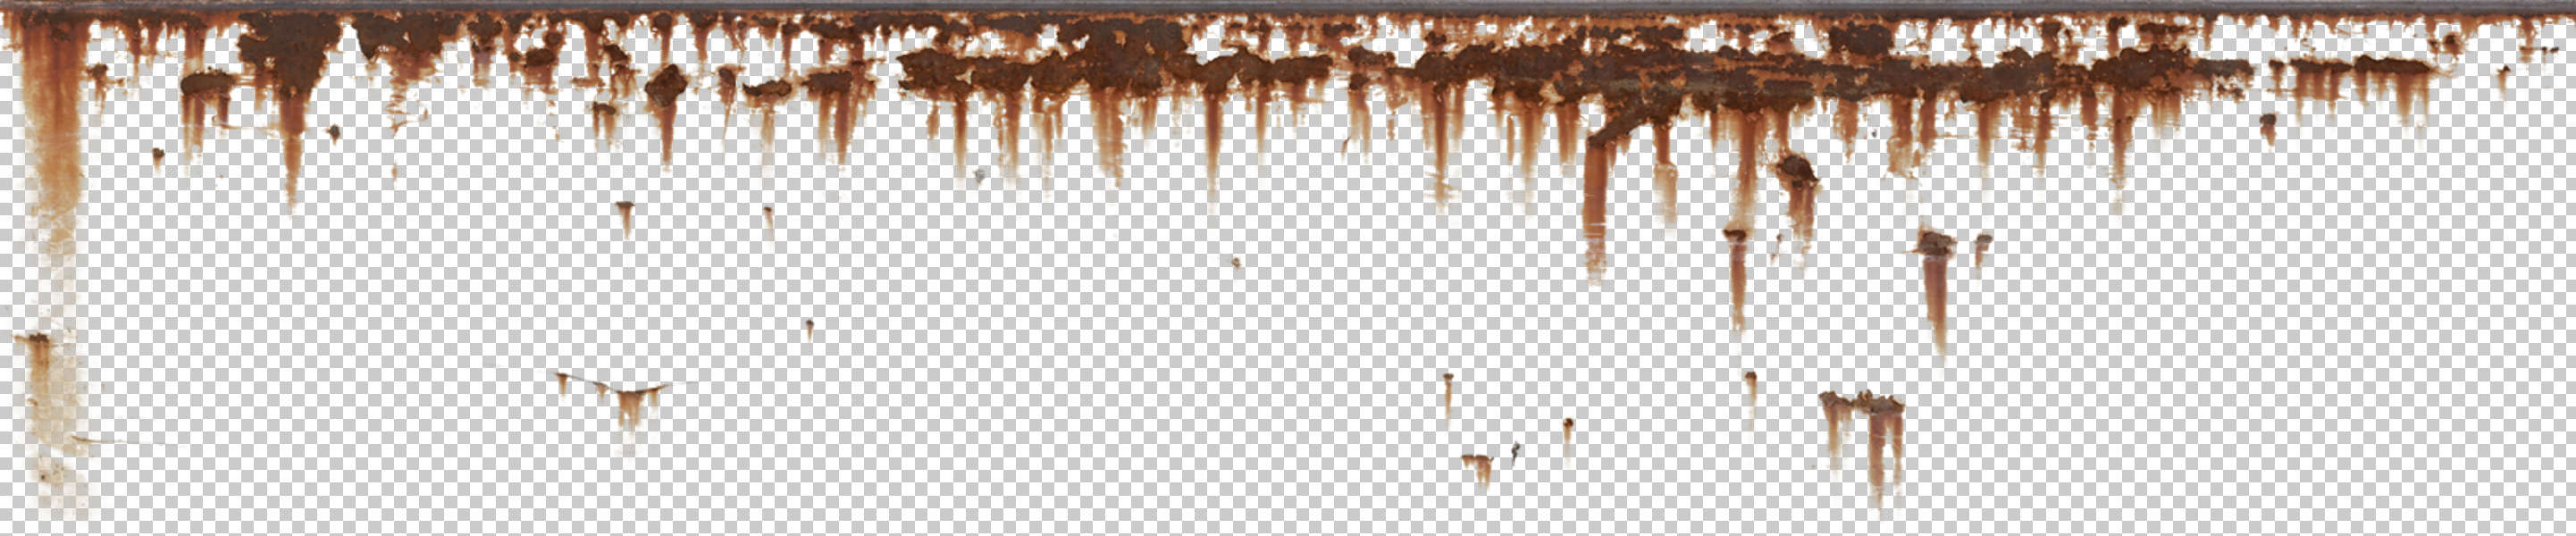 растянутый экран rust фото 59